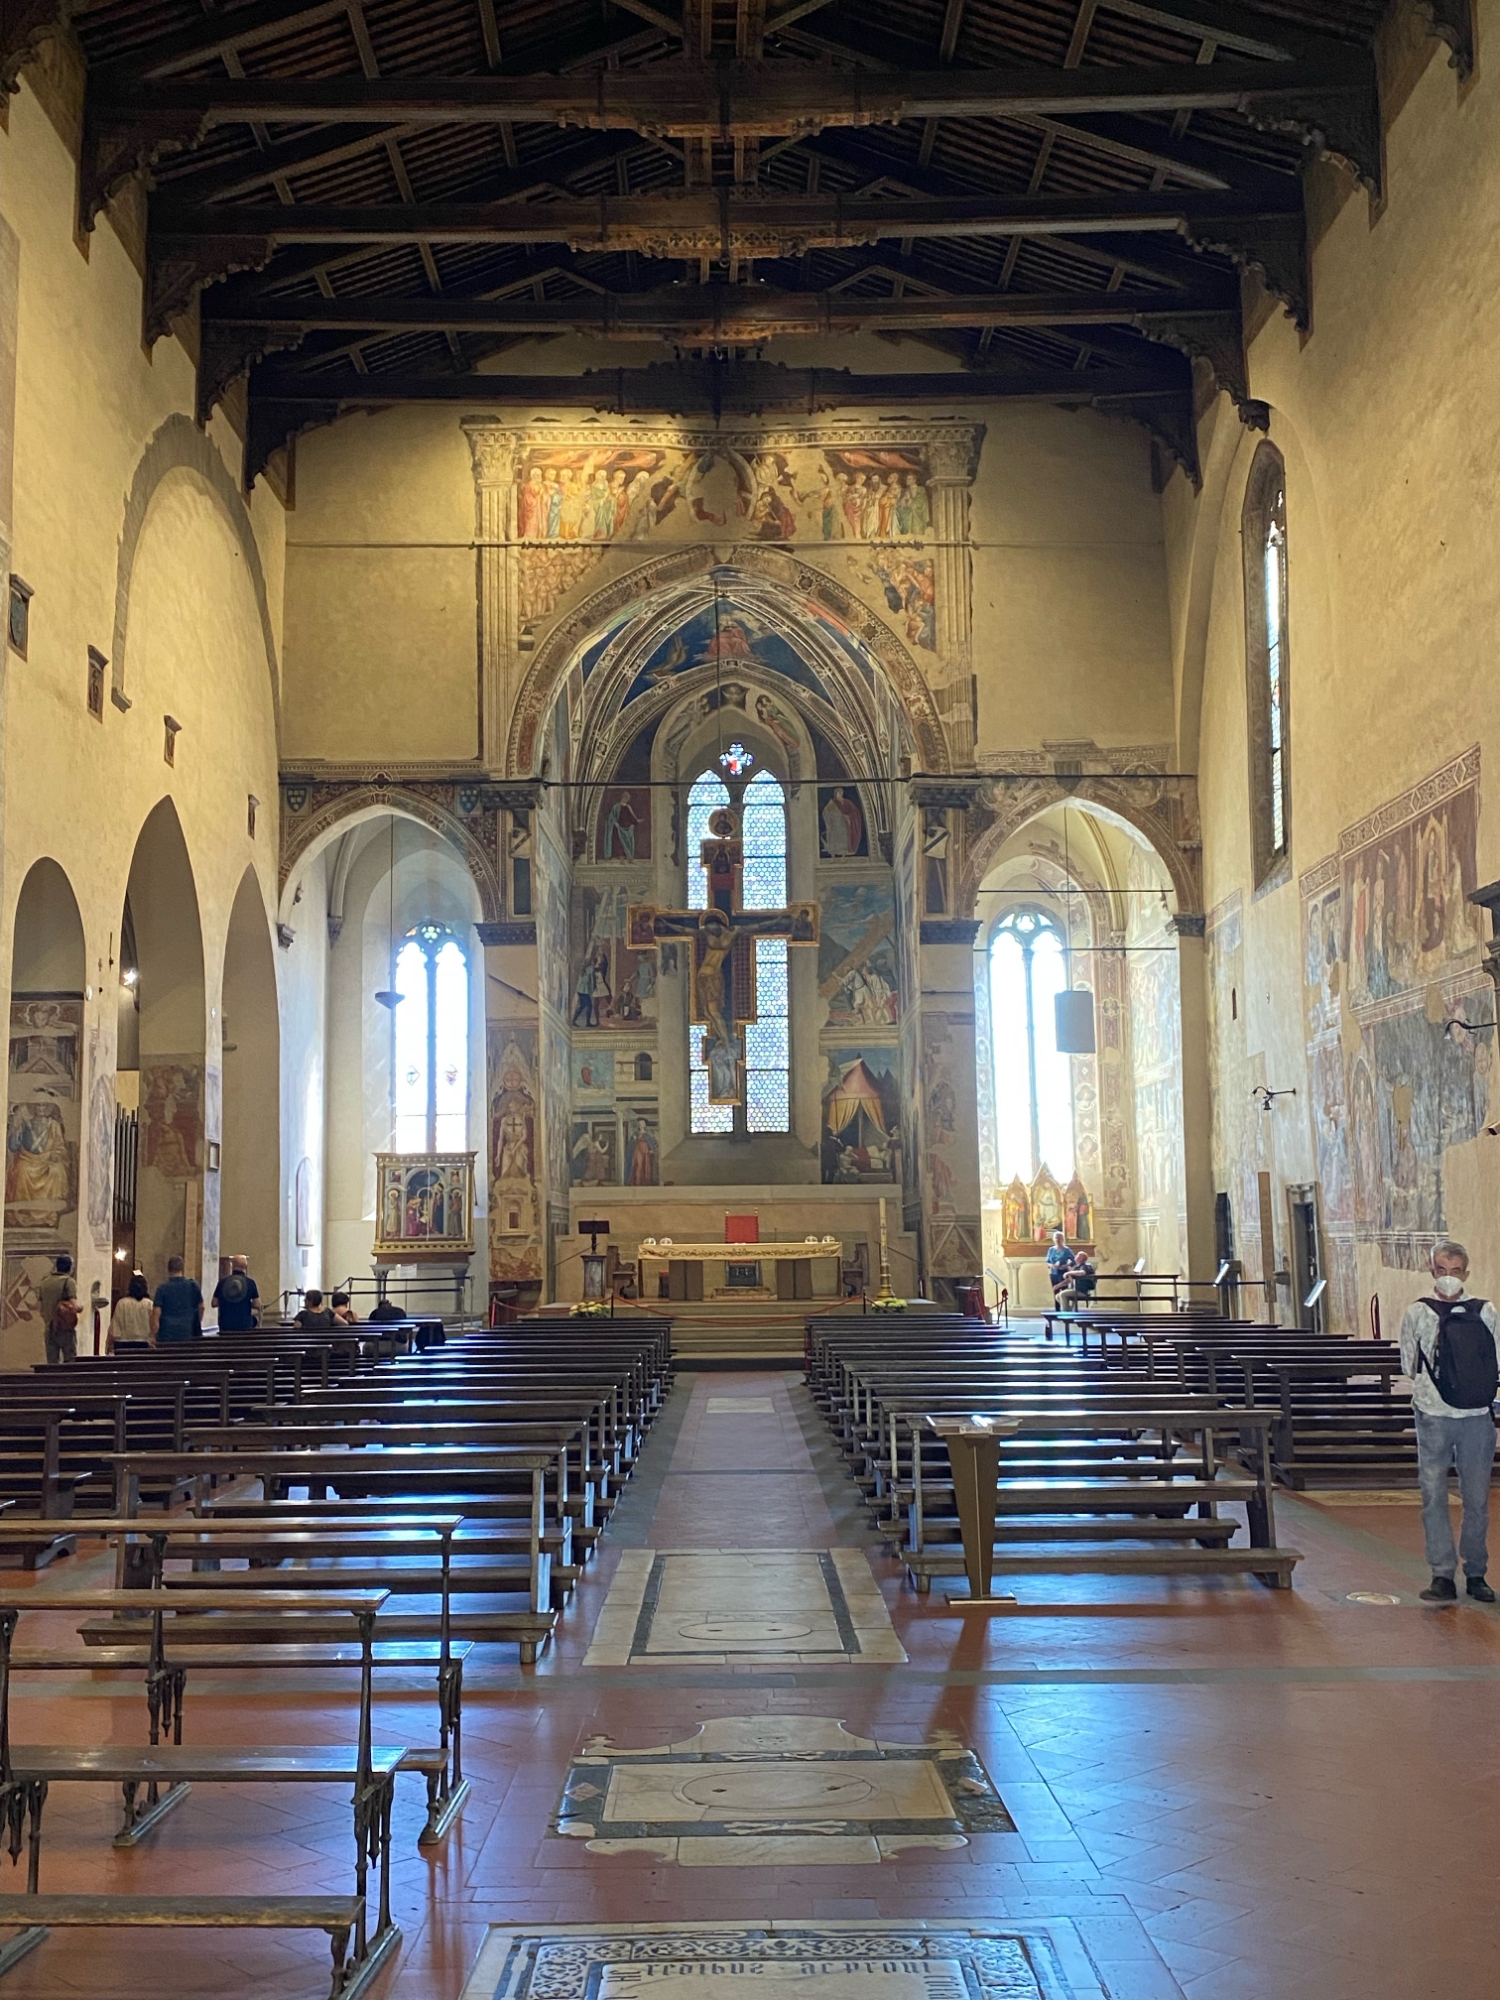 Inside of an Italian church